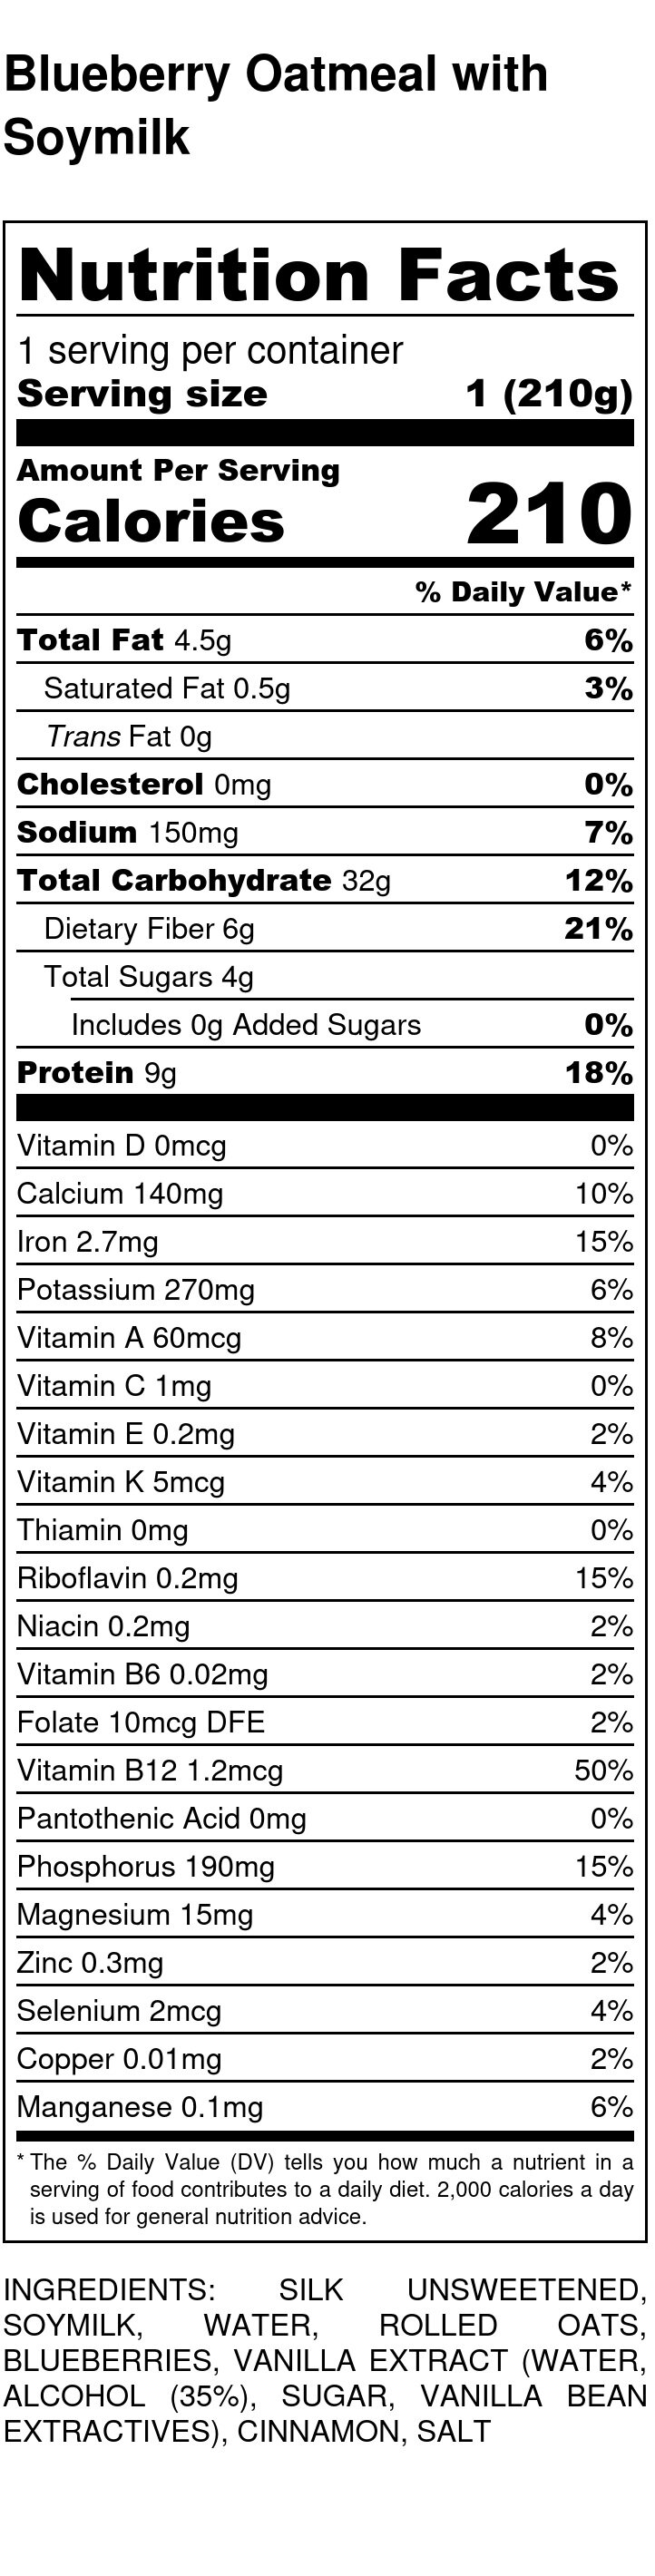 Blueberry Oatmeal with Soymilk - Nutrition Label.jpg